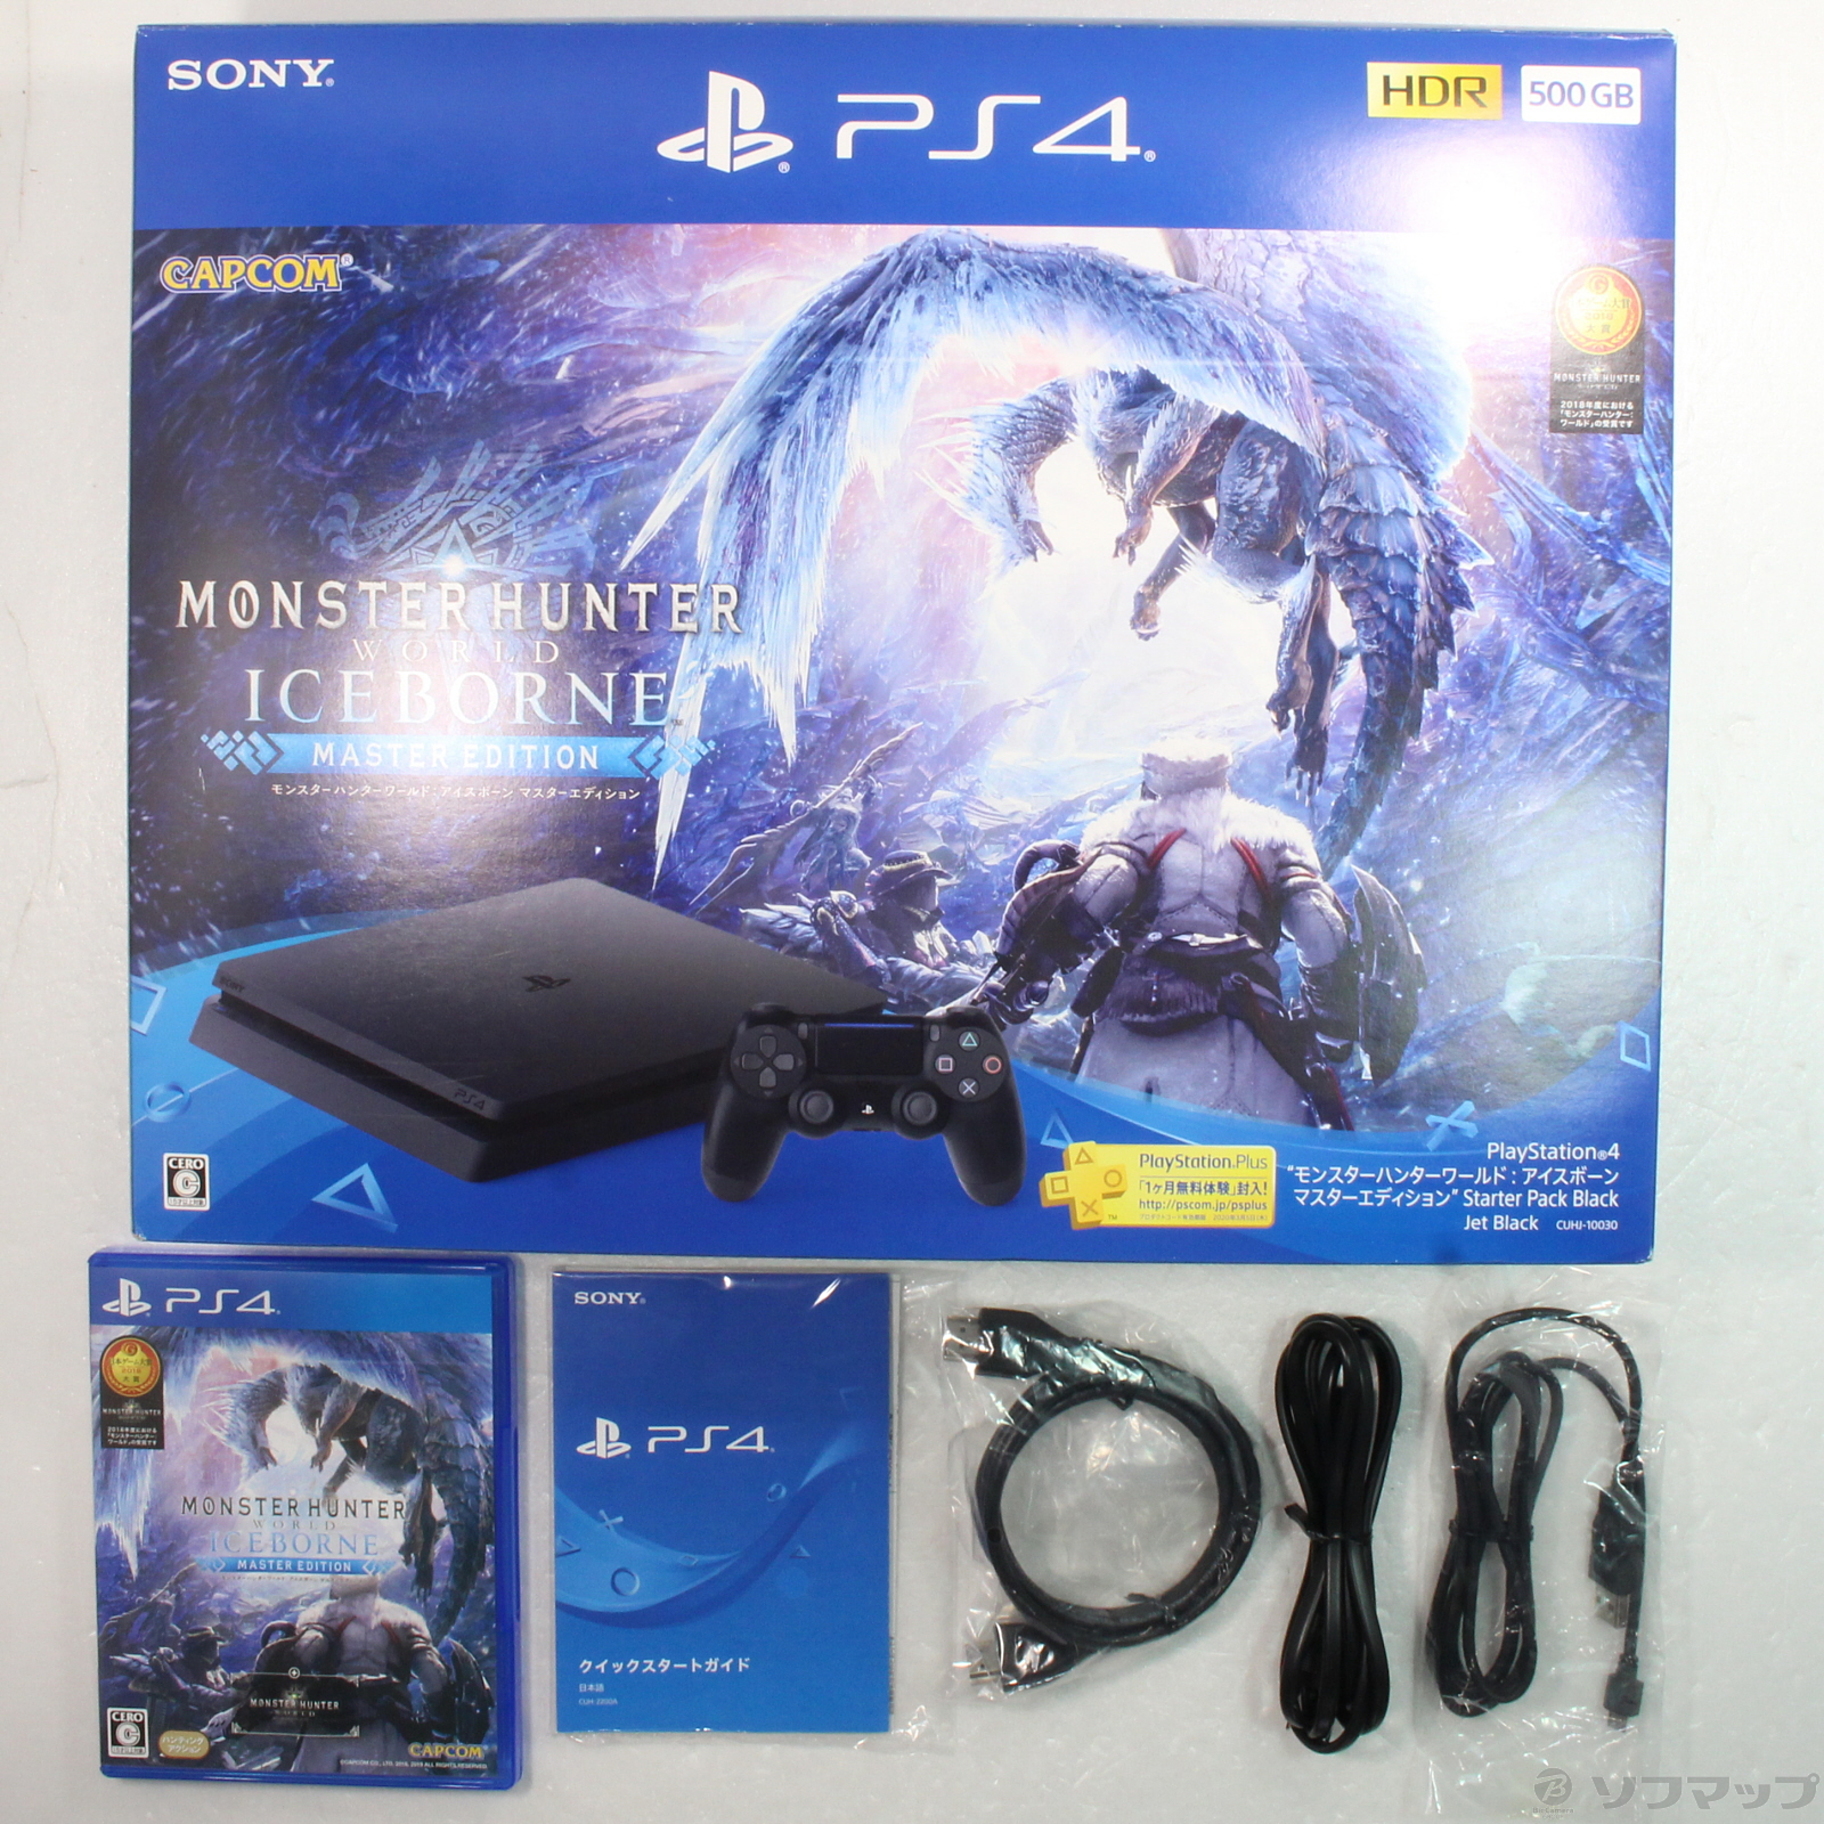 PlayStation 4 “モンスターハンターワールド: アイスボーンマスターエディション" Starter Pack Black [video game]/【PlayStation 4】